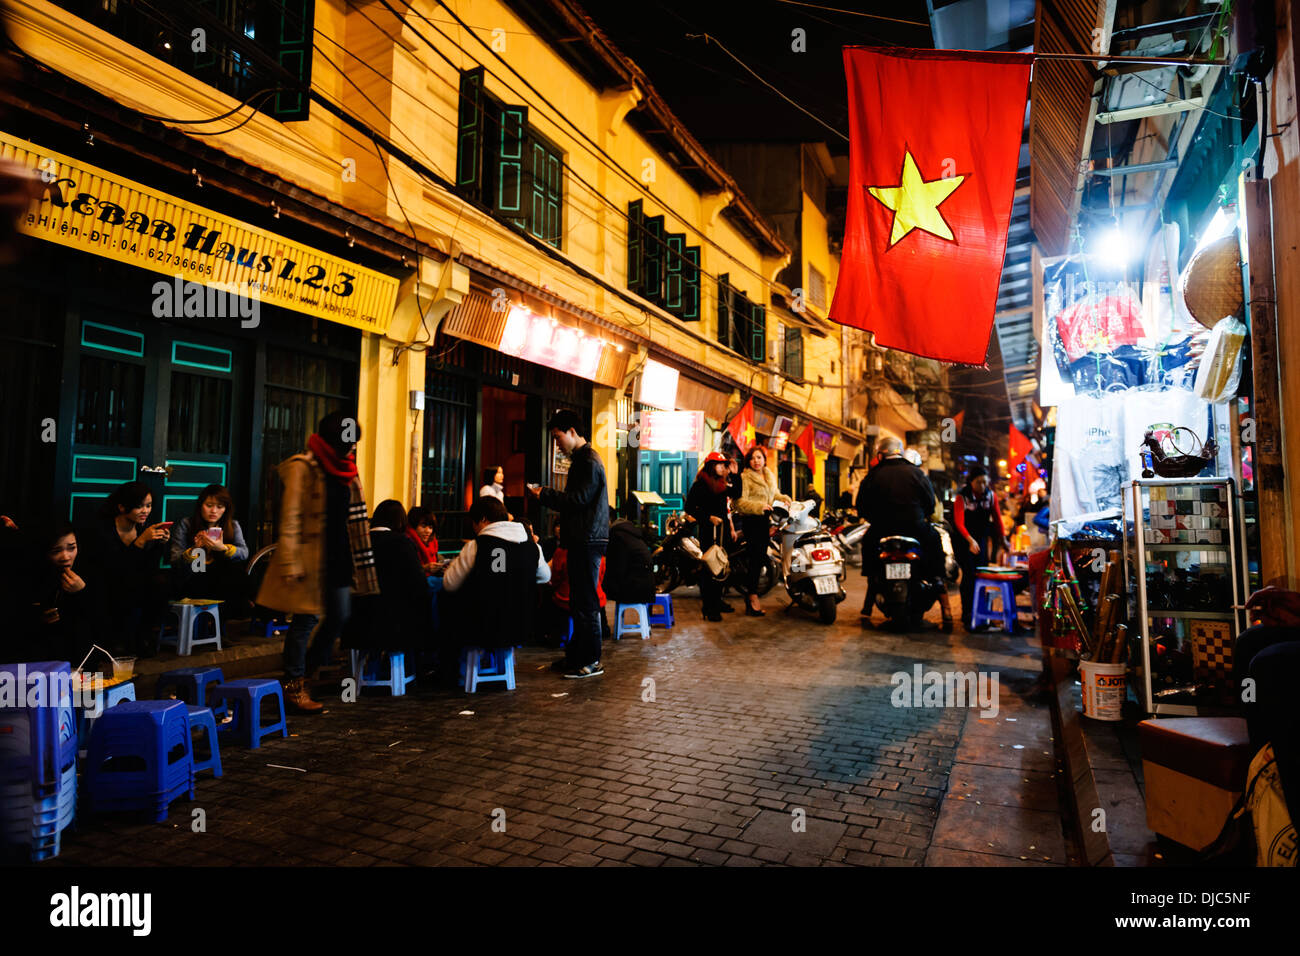 Nightlife in the streets of Hanoi, Vietnam. Stock Photo